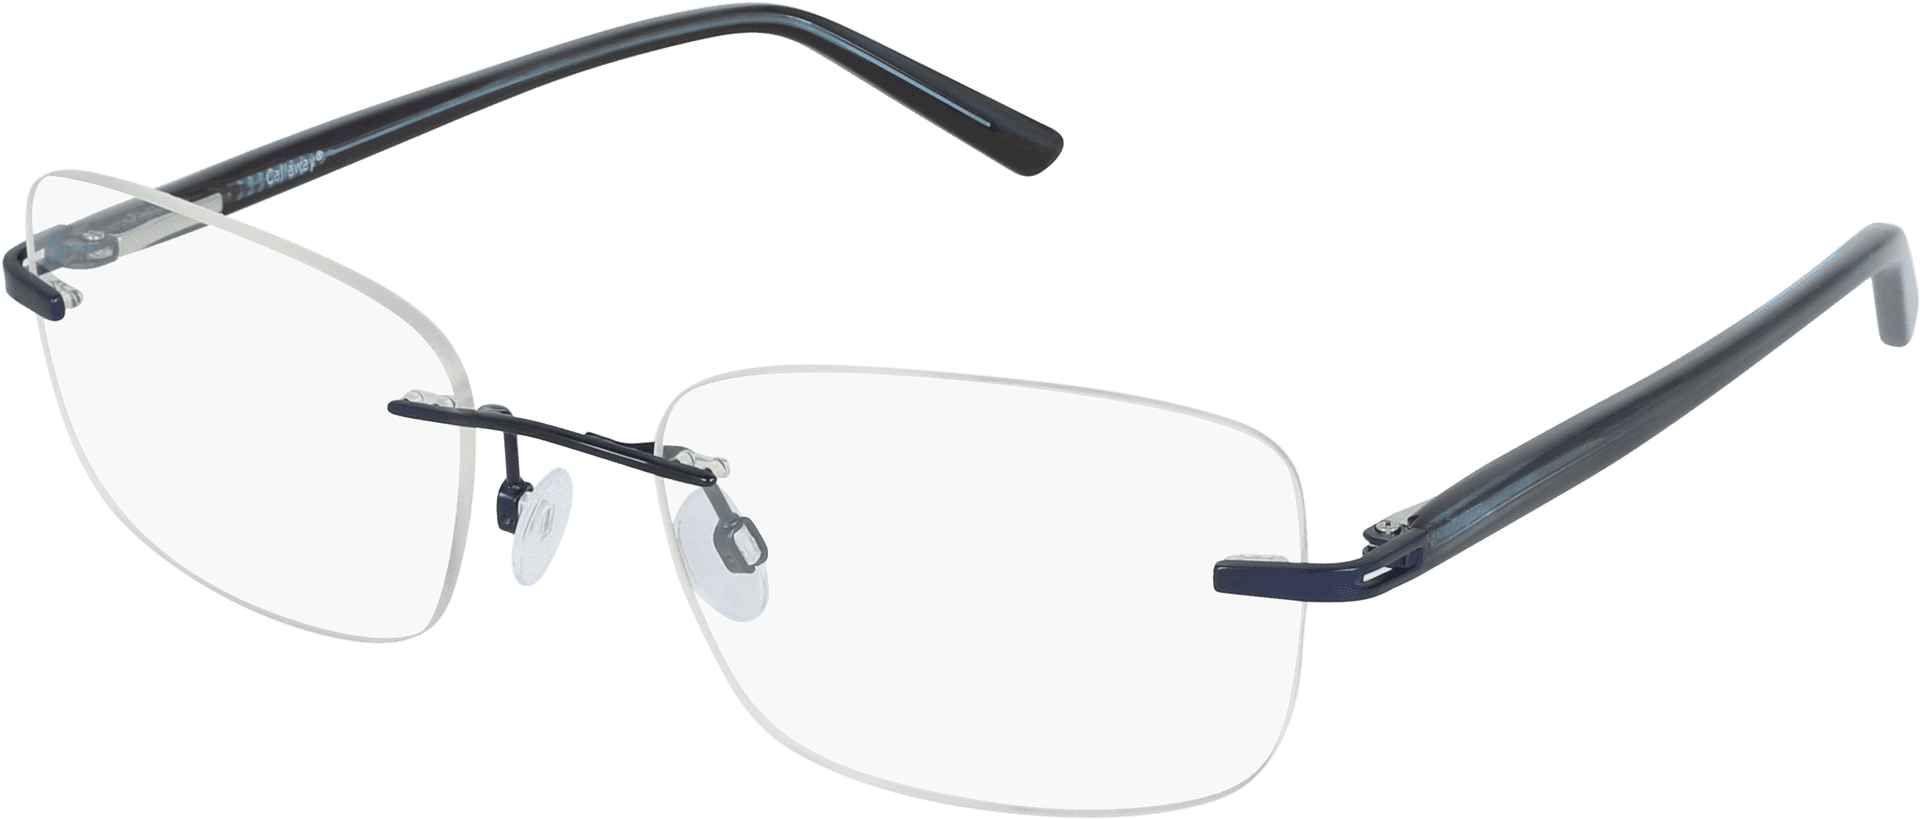 Modern Rimless Eyeglasses PNG